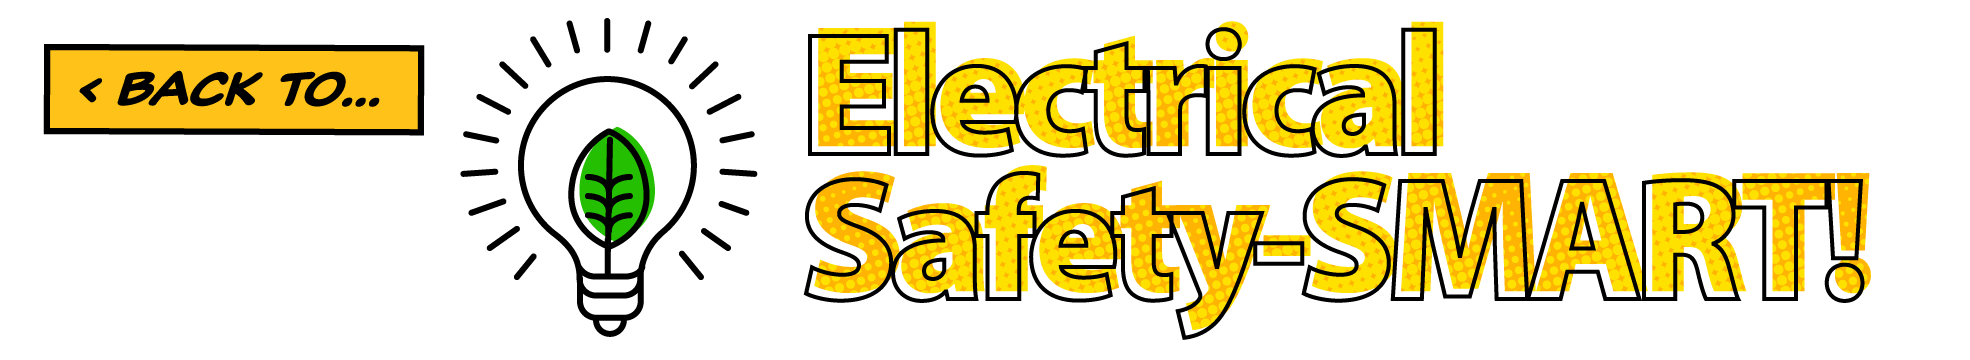 66410 Elec Safety SMART subpage bnr 1970x220 trans